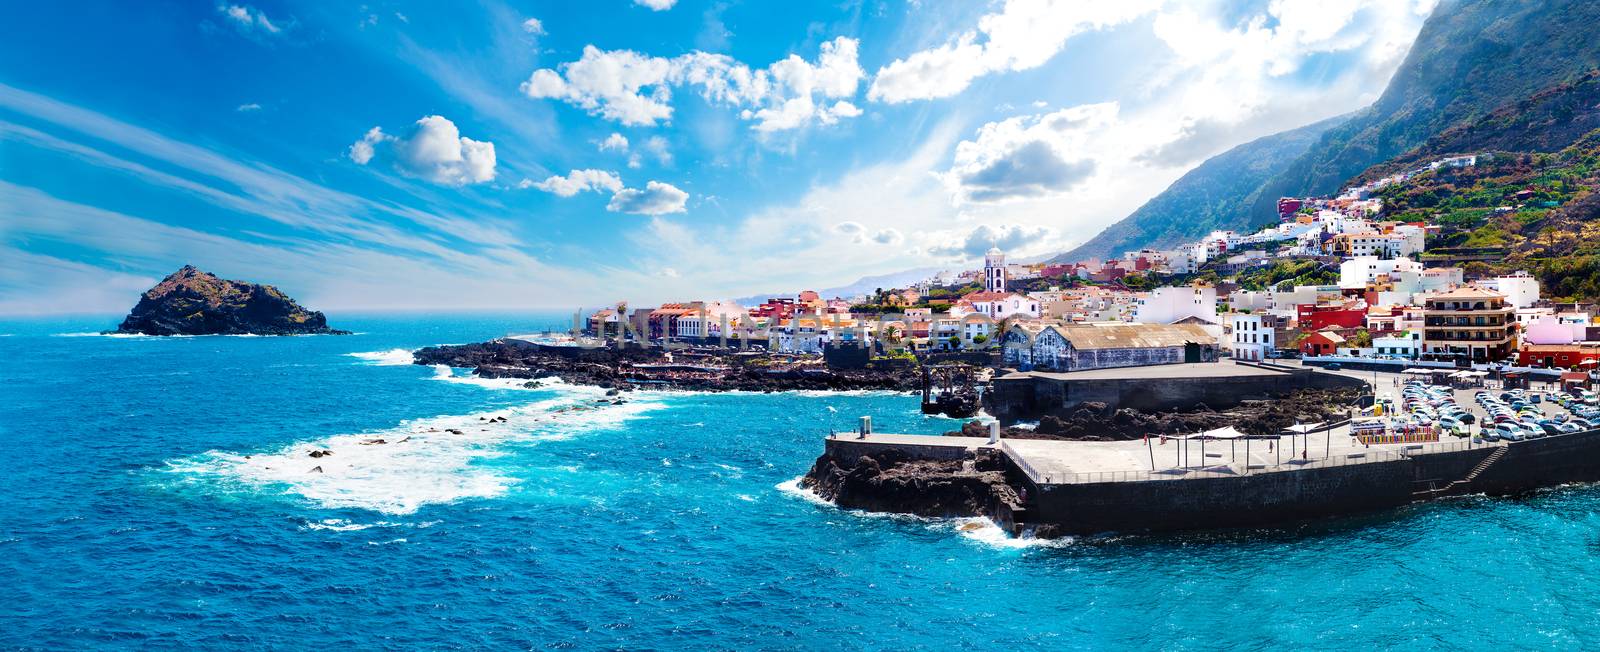 Nature scenic seascape in Canary Island.Travel adventures landscape in Garachico village